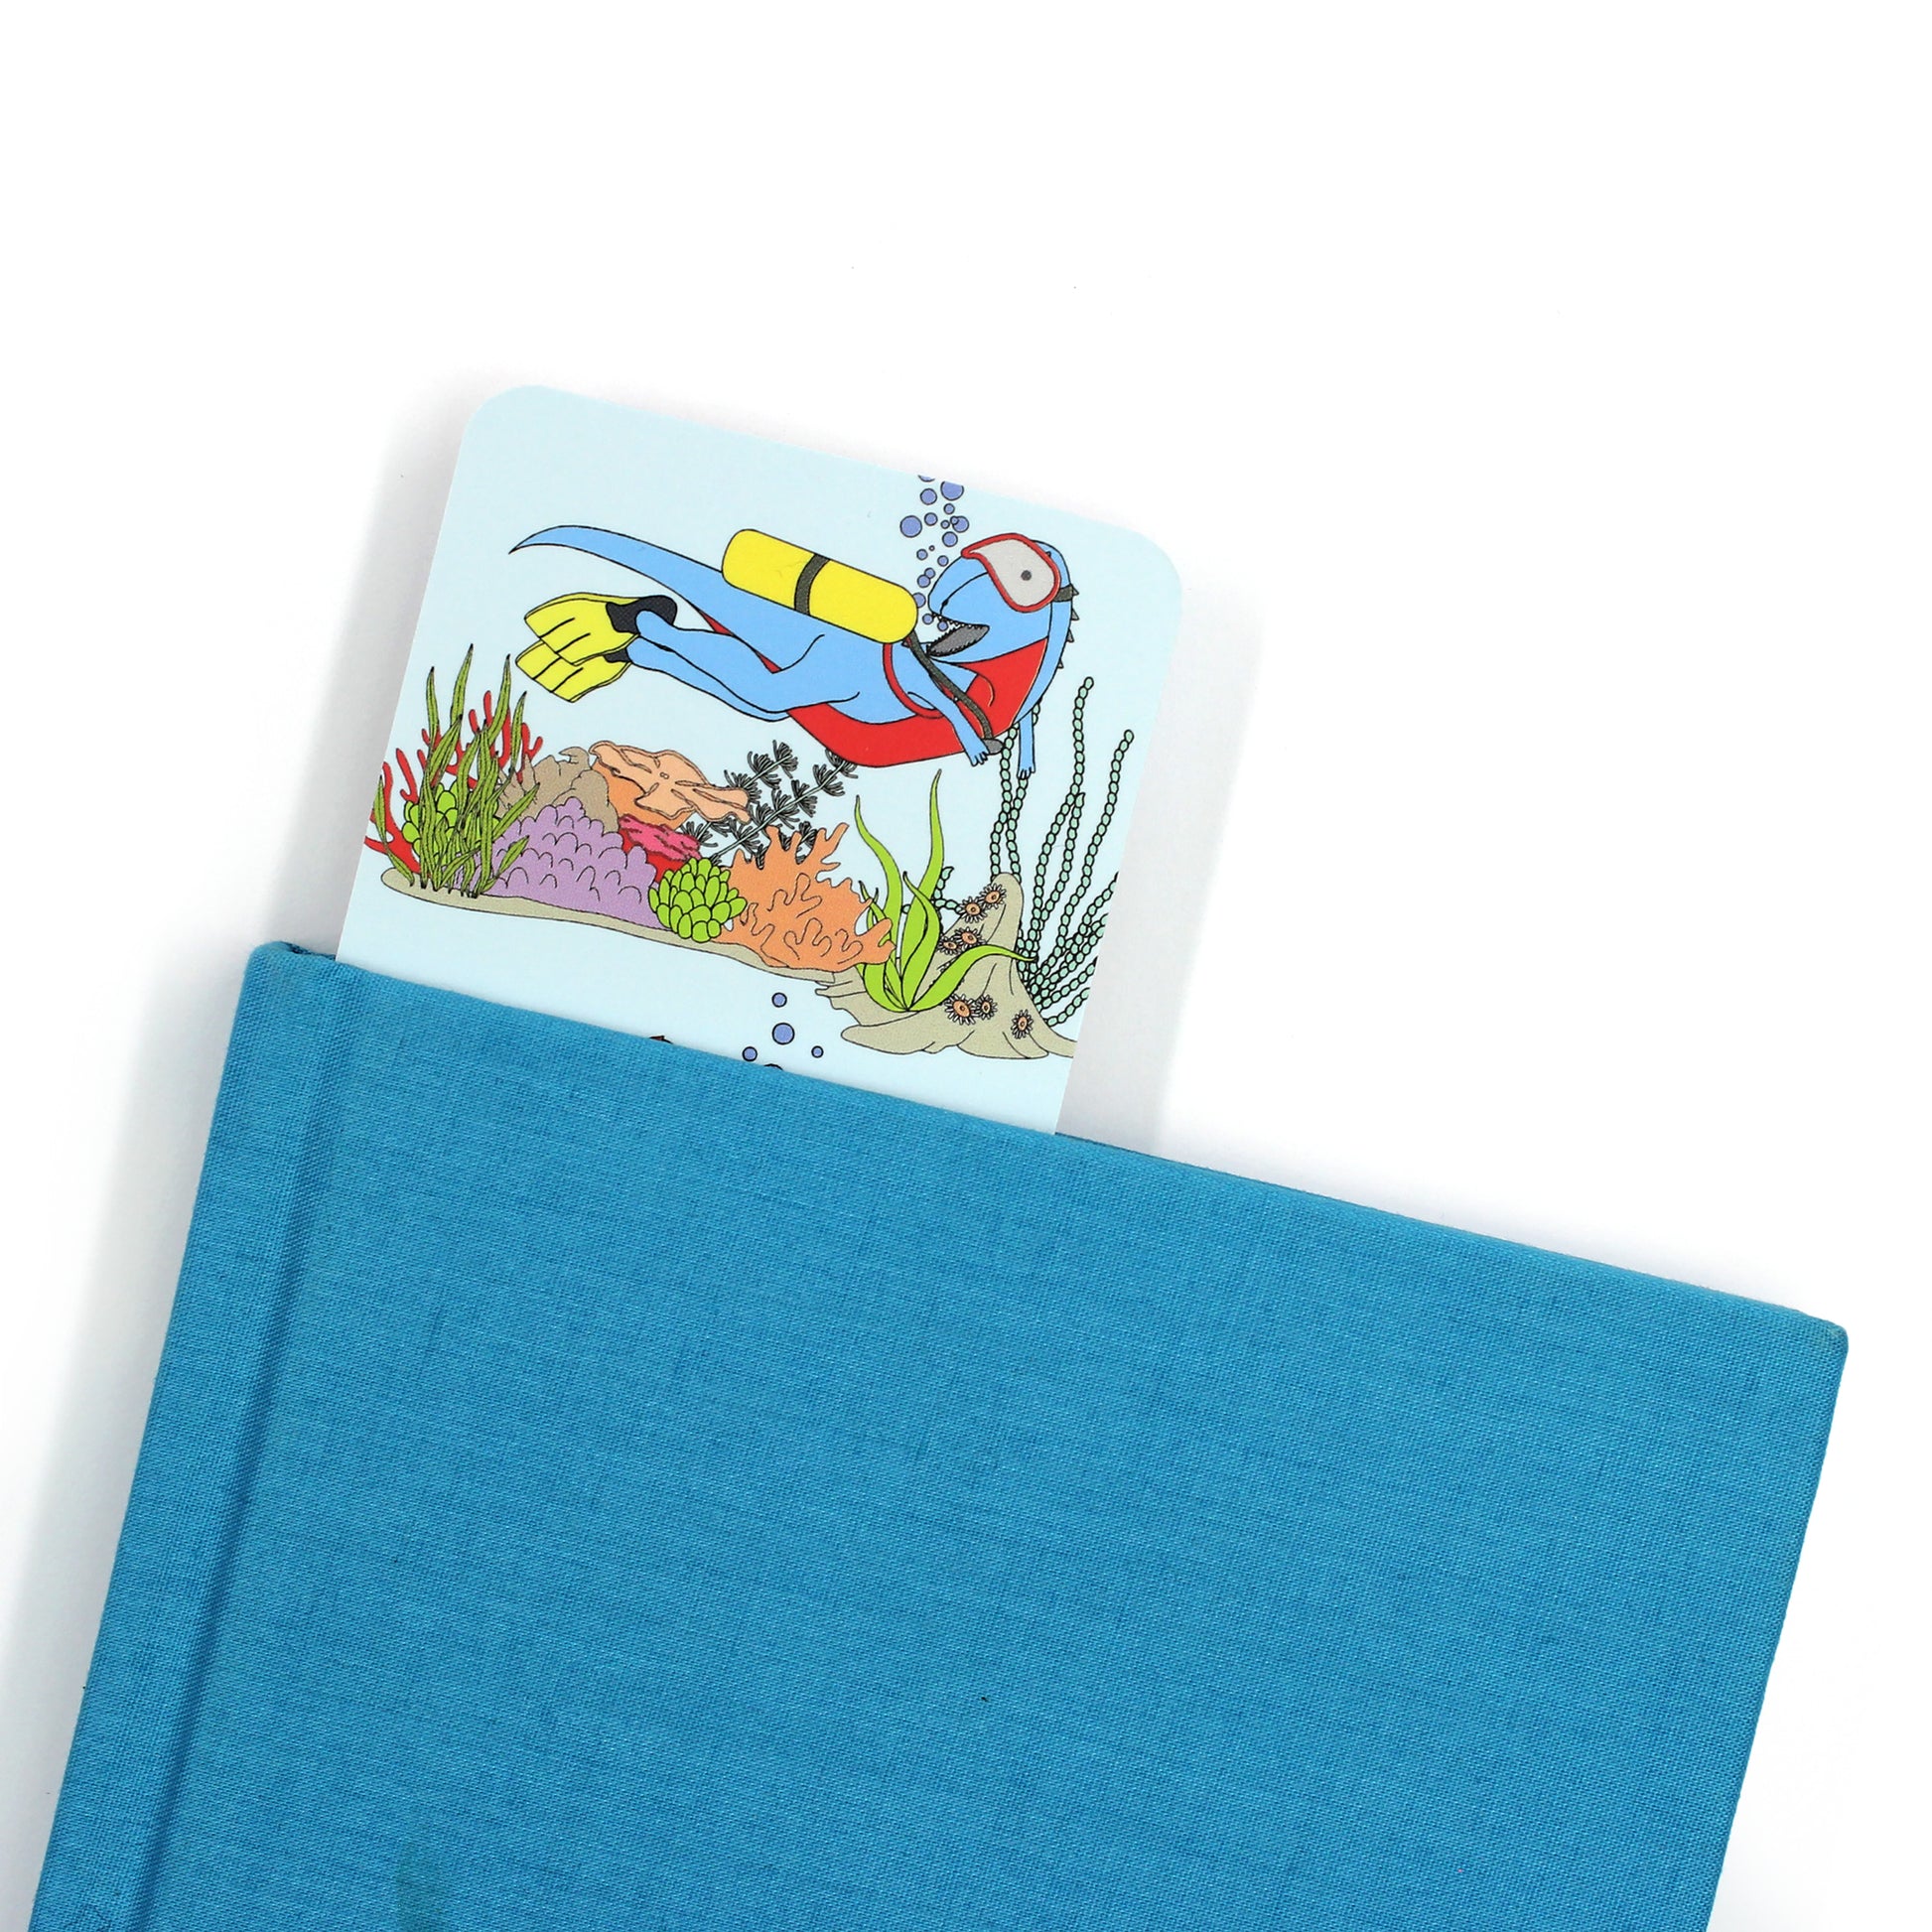 under the sea dinosaur bookmark in blue book